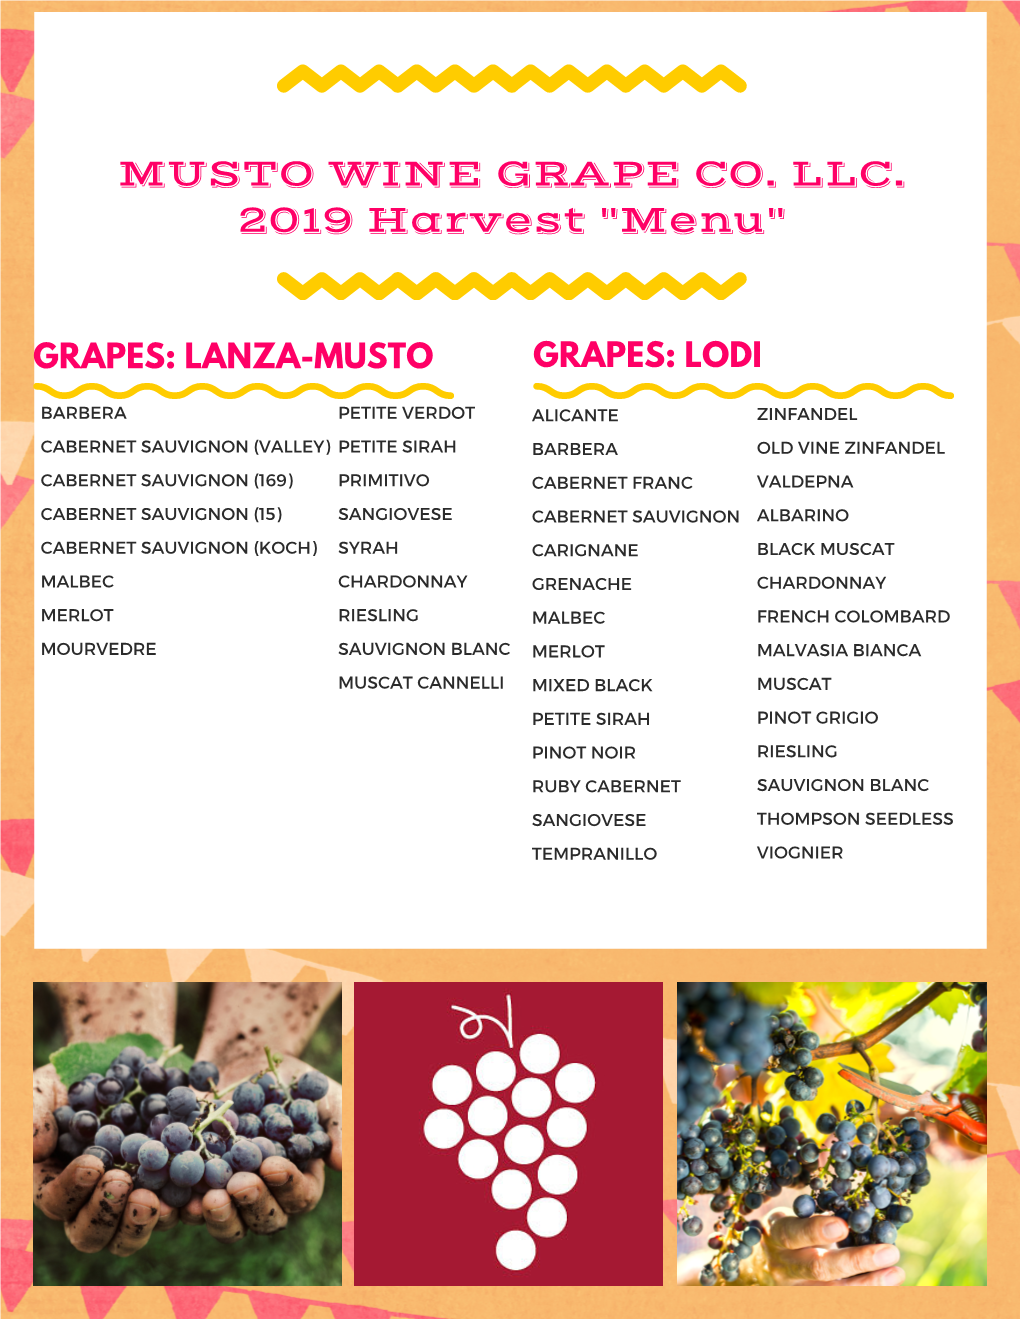 MUSTO WINE GRAPE CO. LLC. 2019 Harvest "Menu"